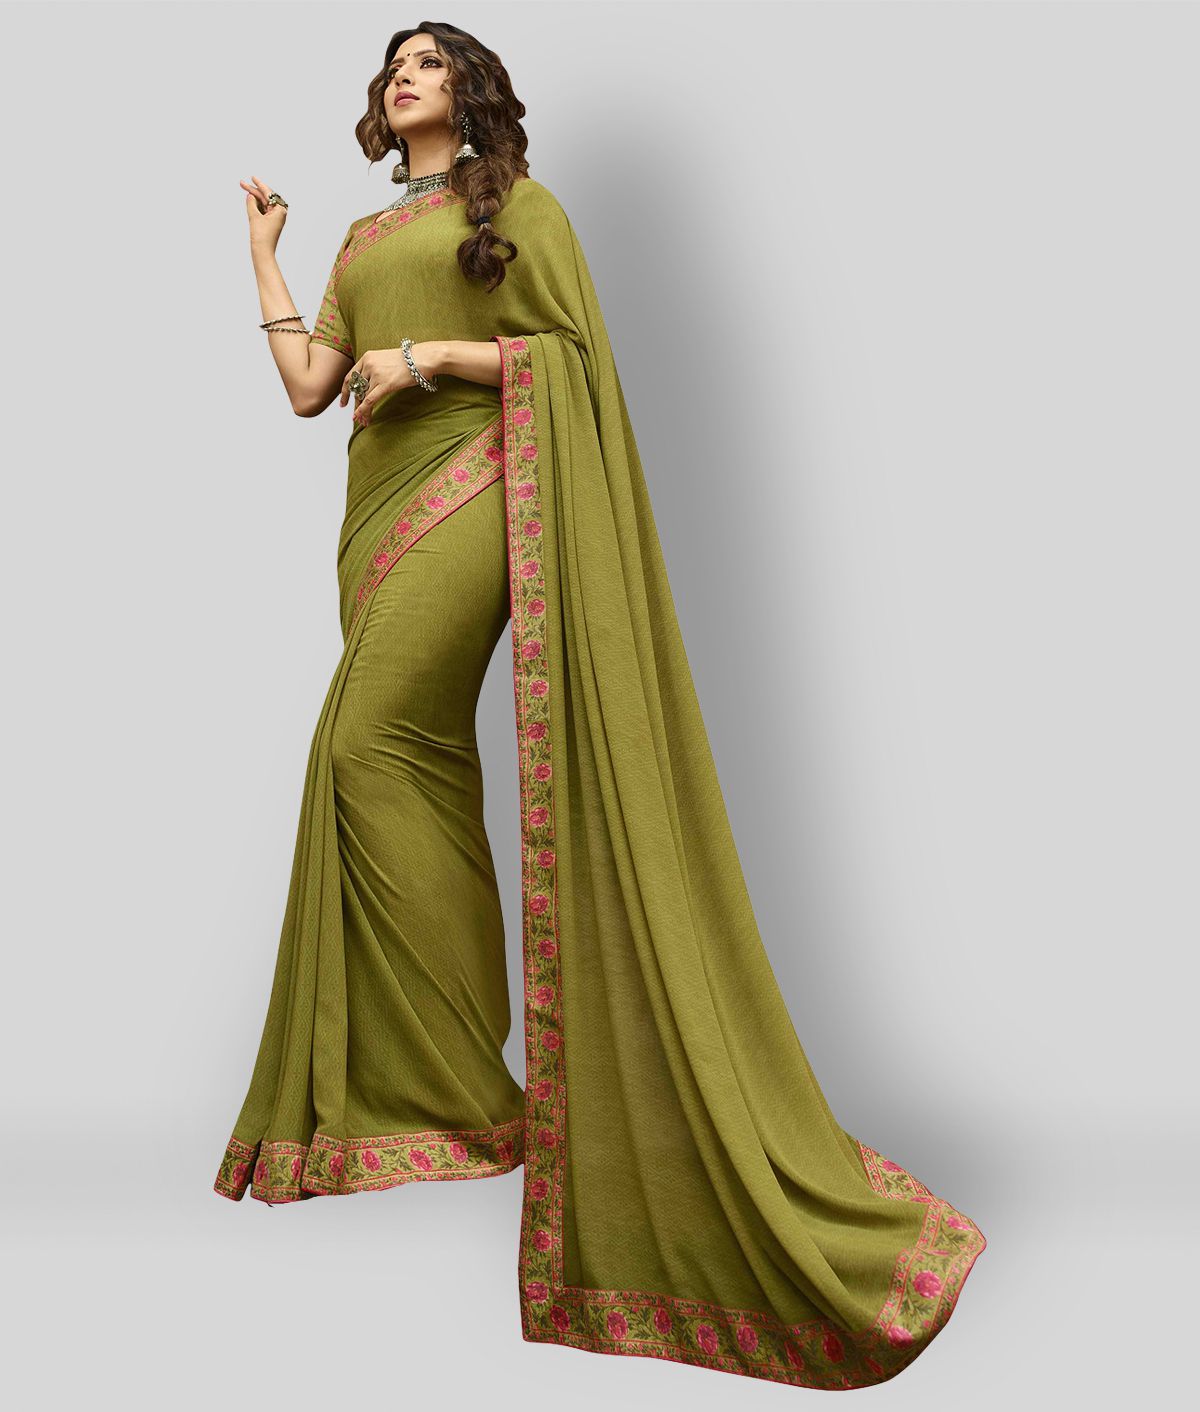     			Gazal Fashions - Green Chiffon Saree With Blouse Piece (Pack of 1)